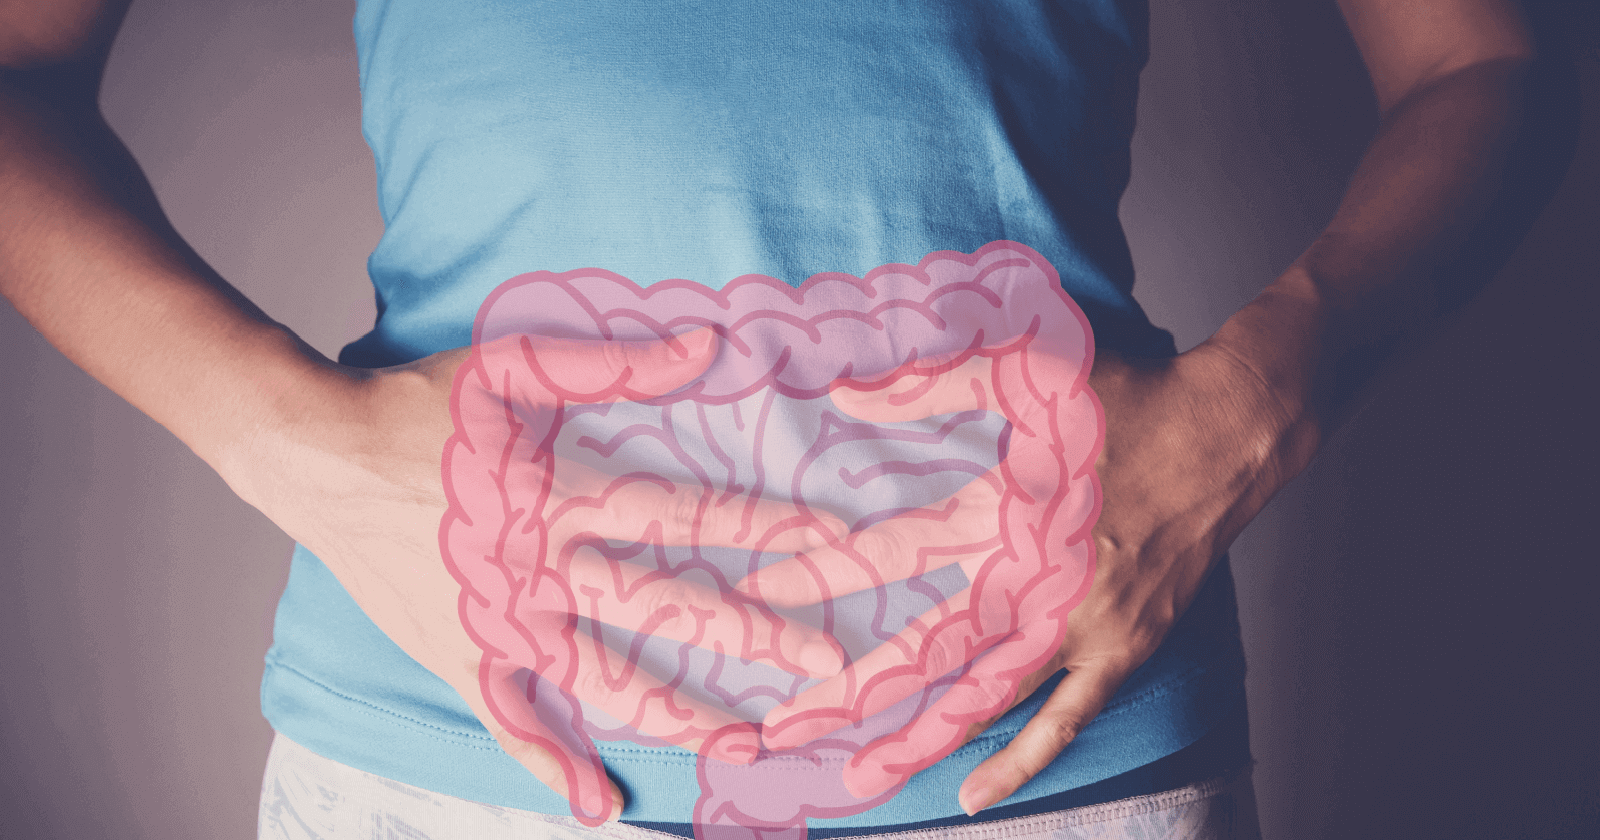 Role of Probiotics and Prebiotics in Gut Health